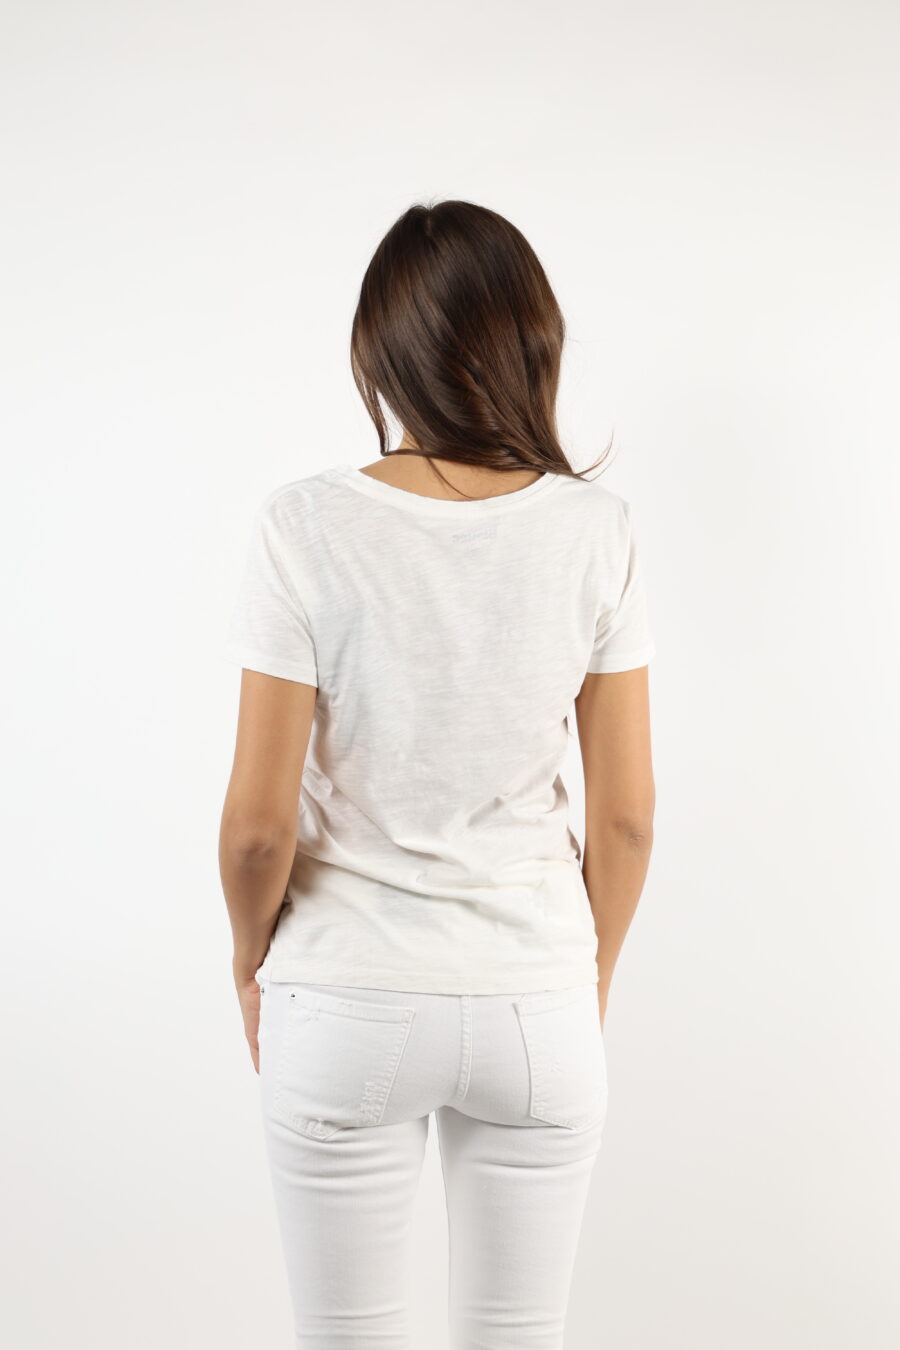 Camiseta blanca con maxilogo texto negro - 110612